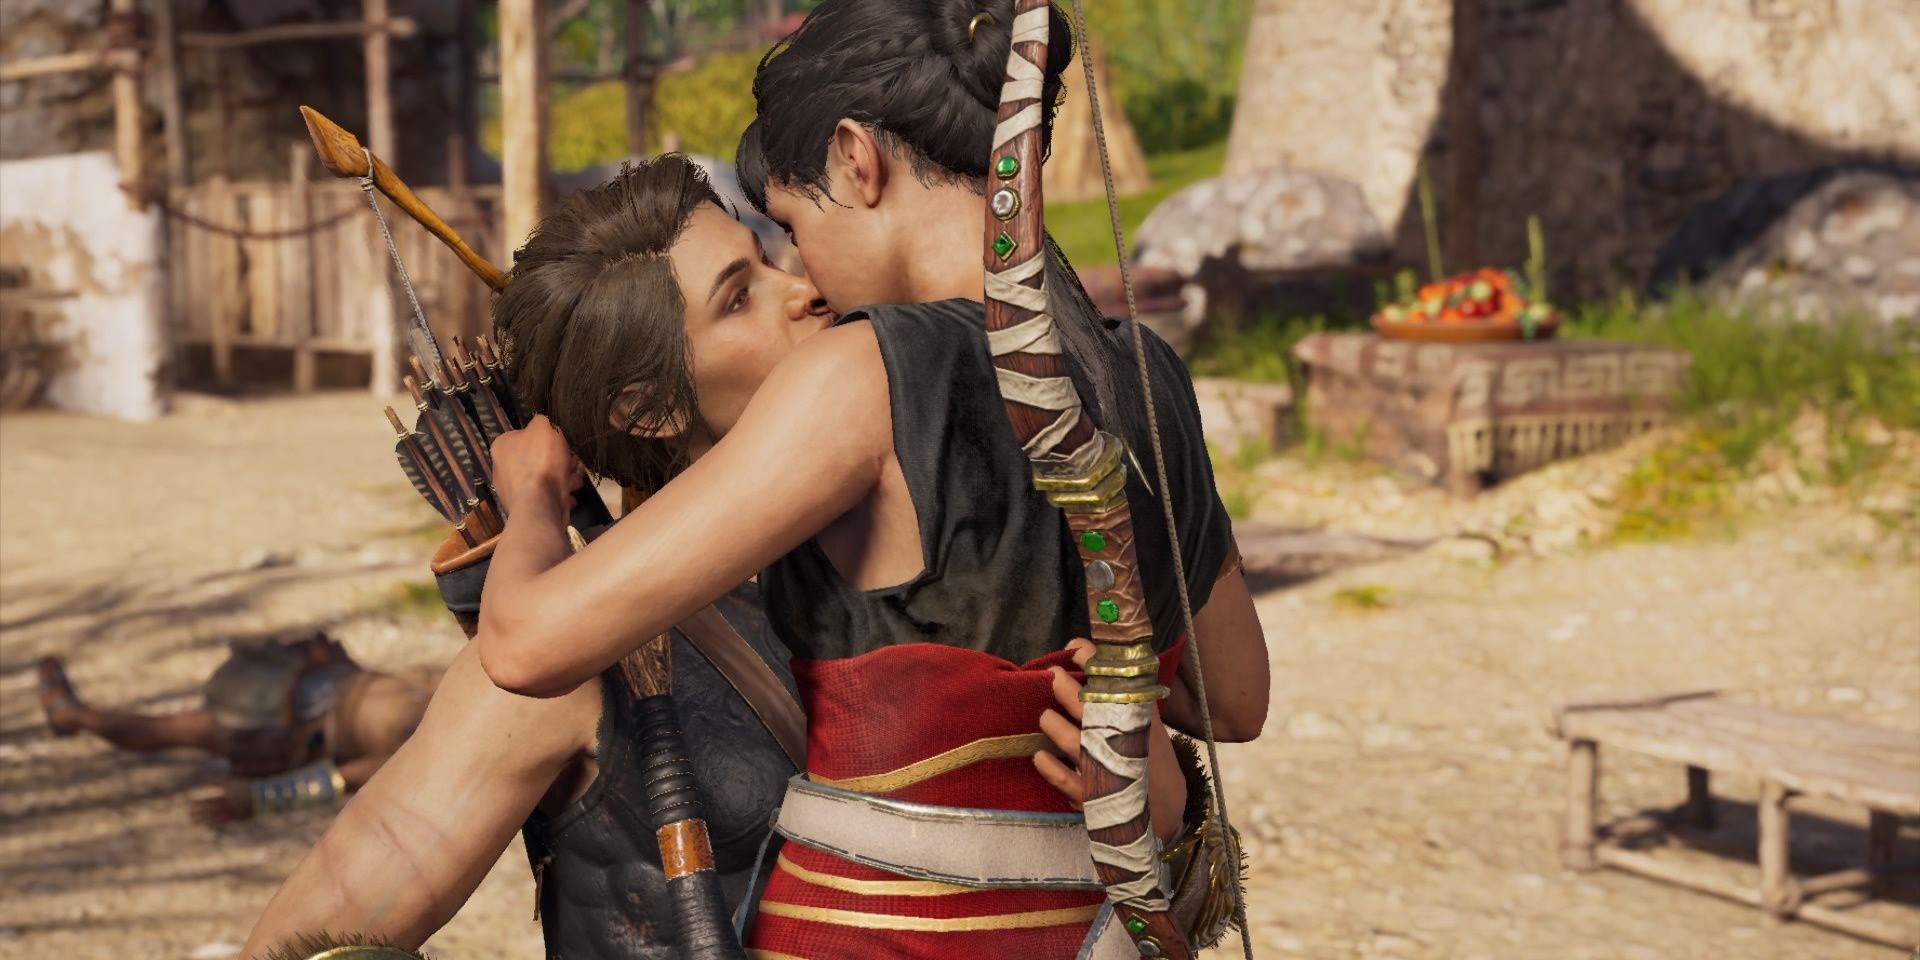 Kassandra kisses Odessa as part of the romance scene